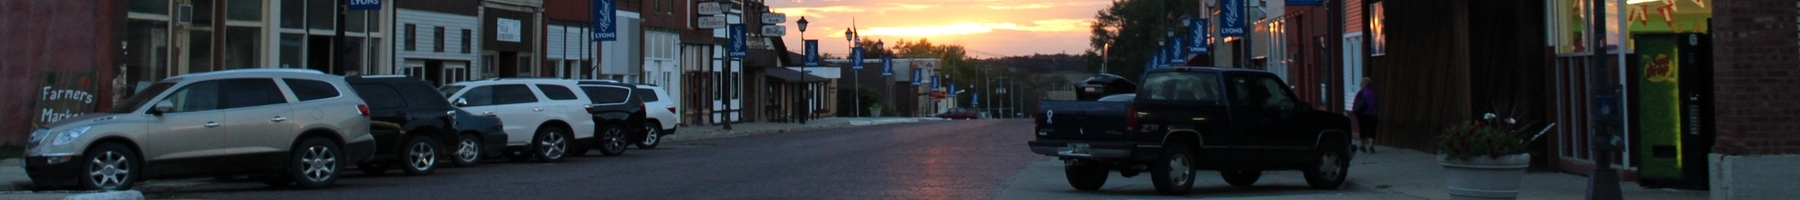 carrer principal de Lyons, Nebraska